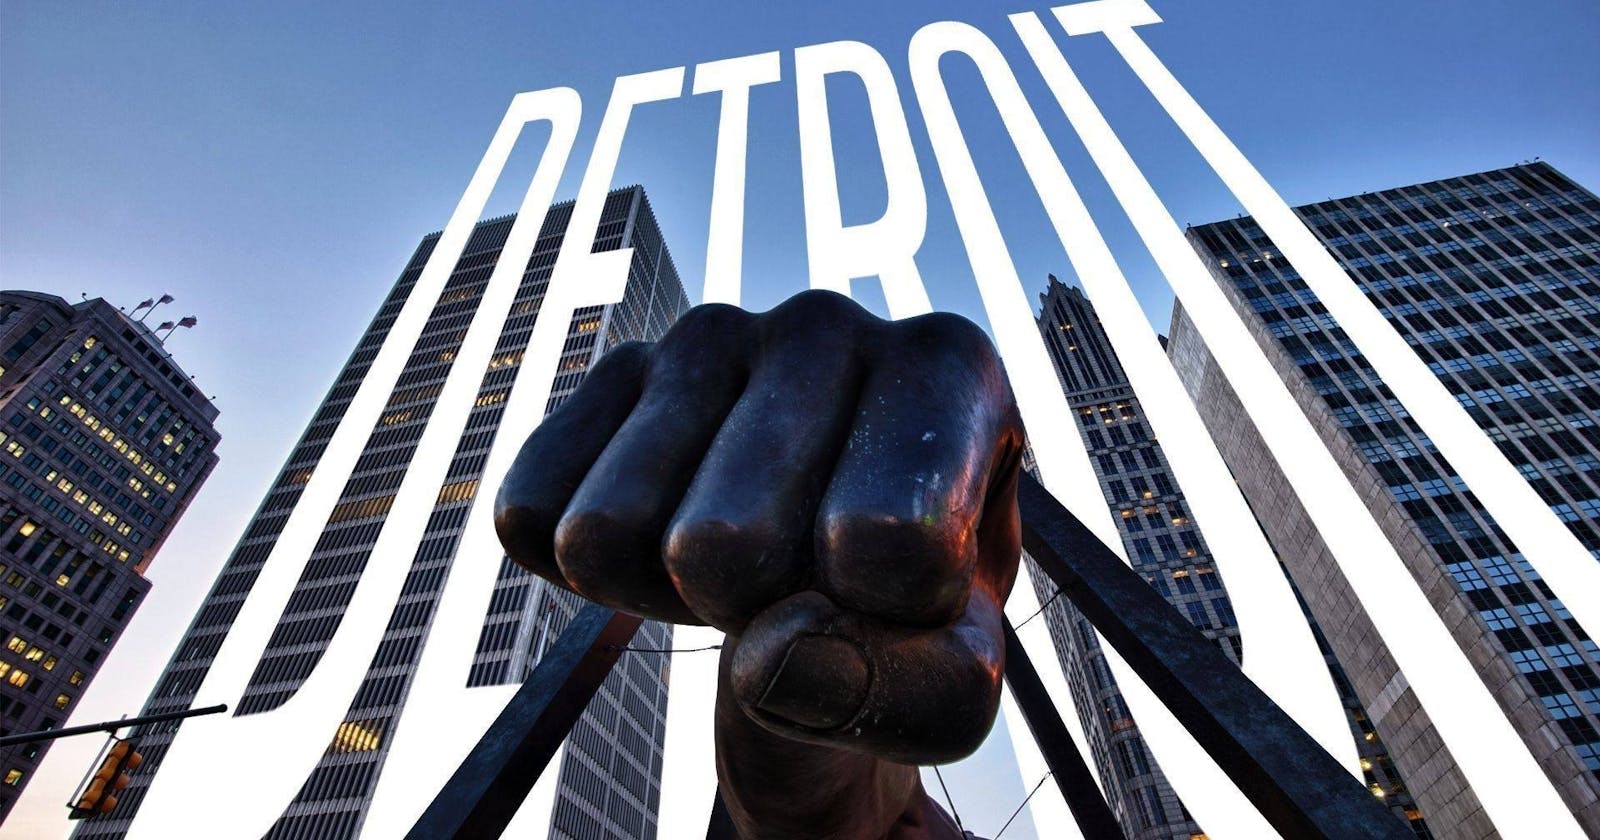 Detroit Christmas: The Eight Days